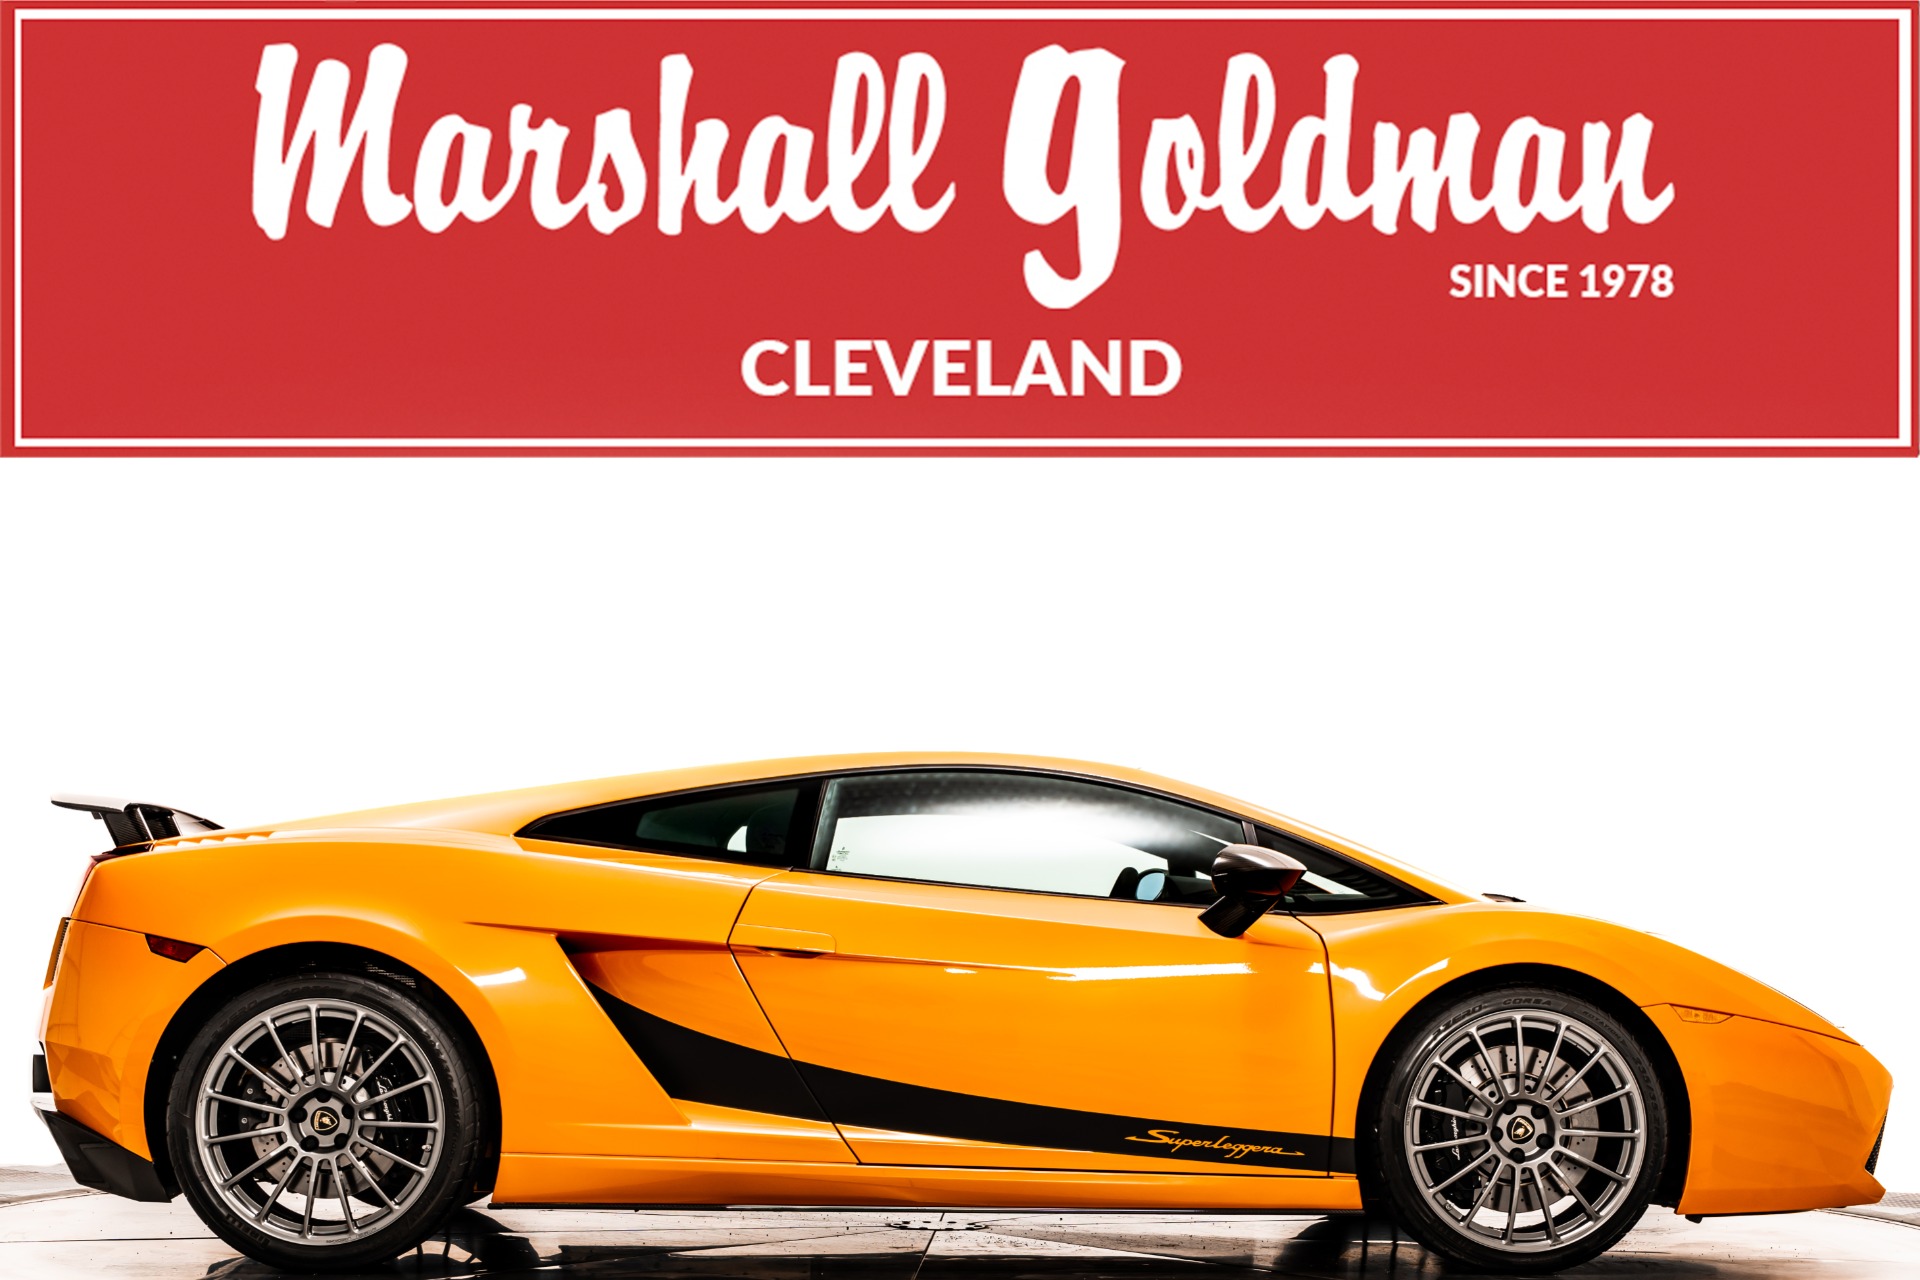 Used 2008 Lamborghini Gallardo Superleggera For Sale (Sold) | Marshall  Goldman Cleveland Stock #W24418